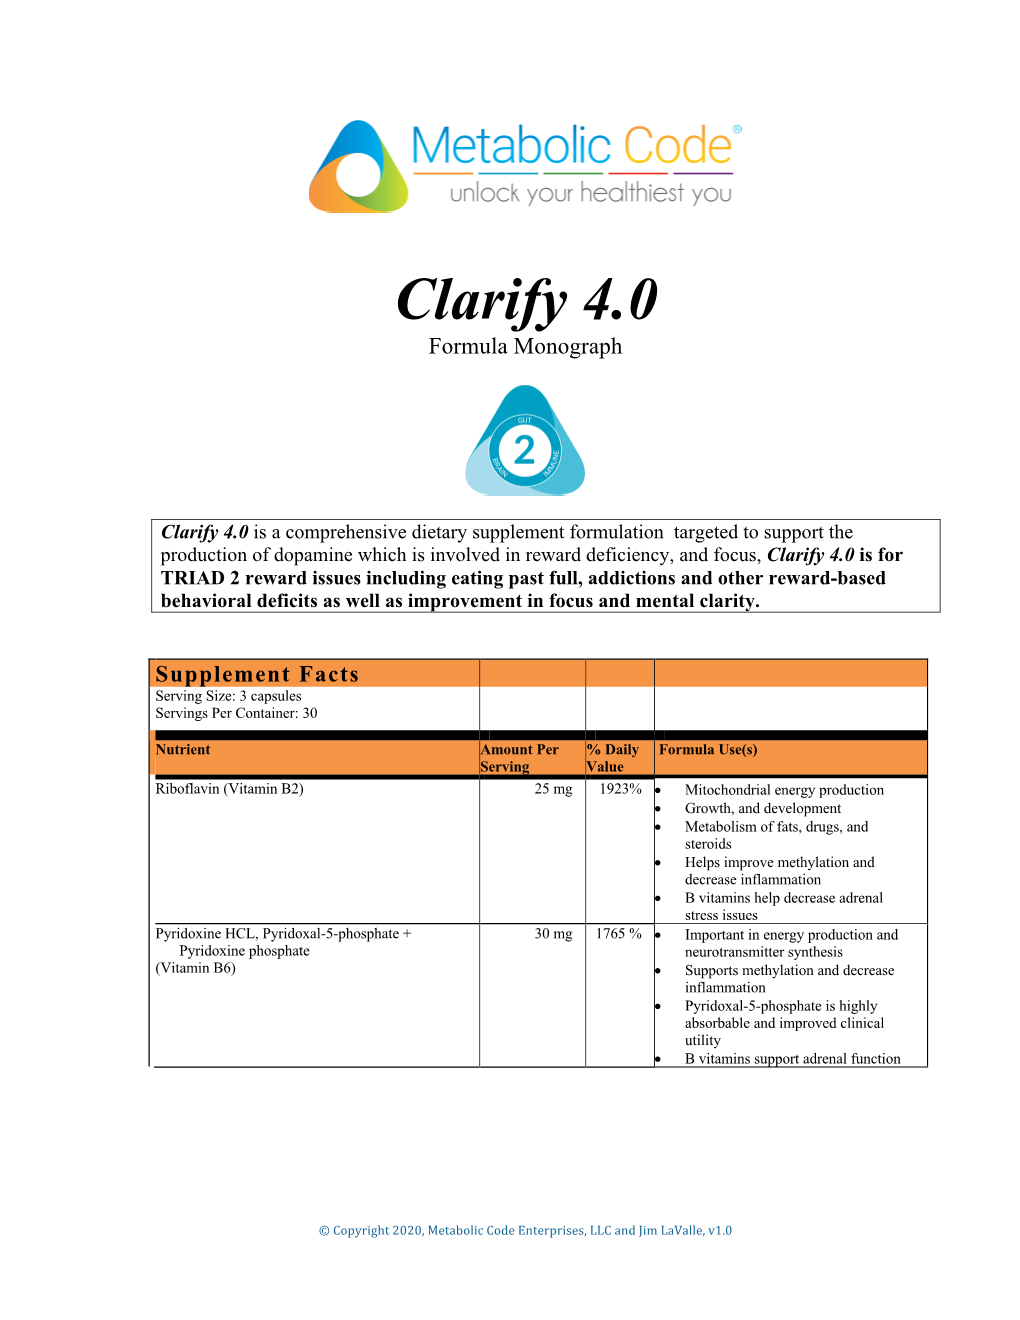 Clarify 4.0 Formula Monograph